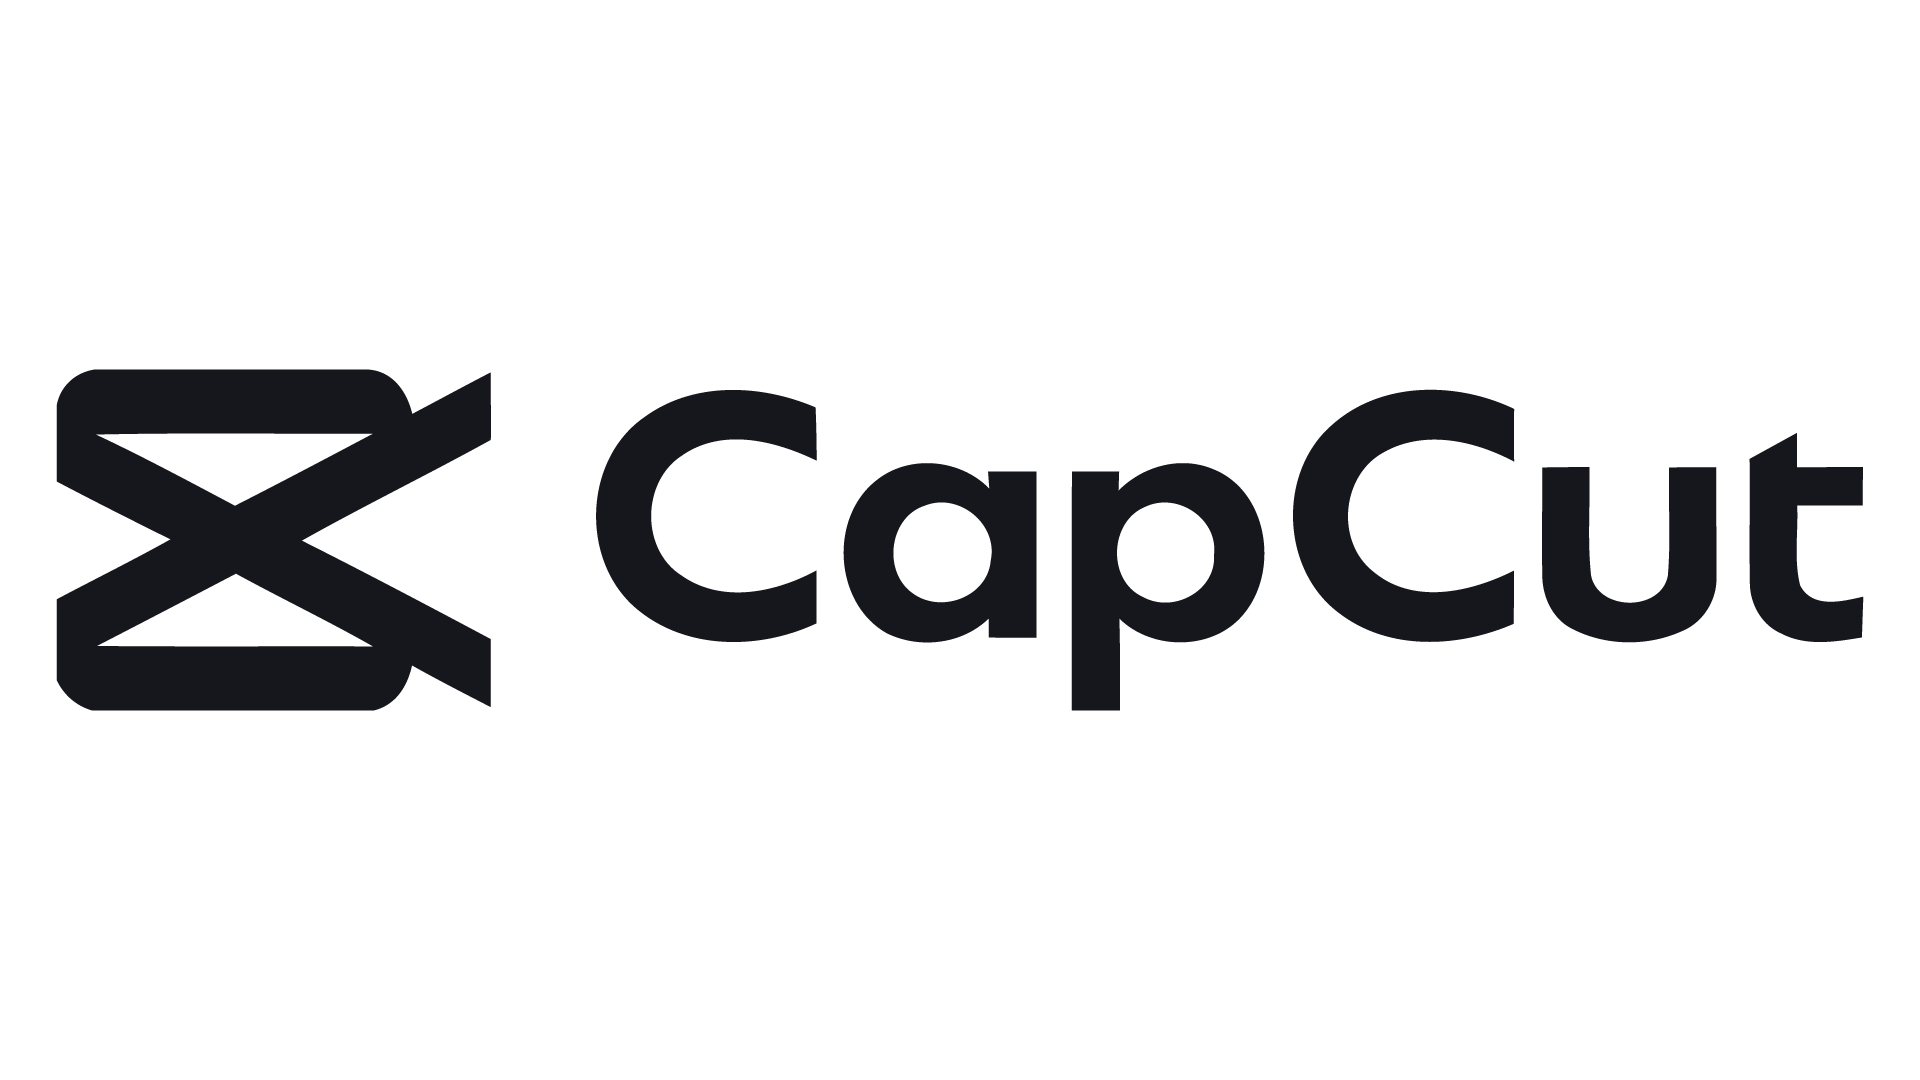 Старый capcut. CAPCUT логотип. Значле CAPCUT. Приложение CAPCUT. Значок CAPCUT PNG.